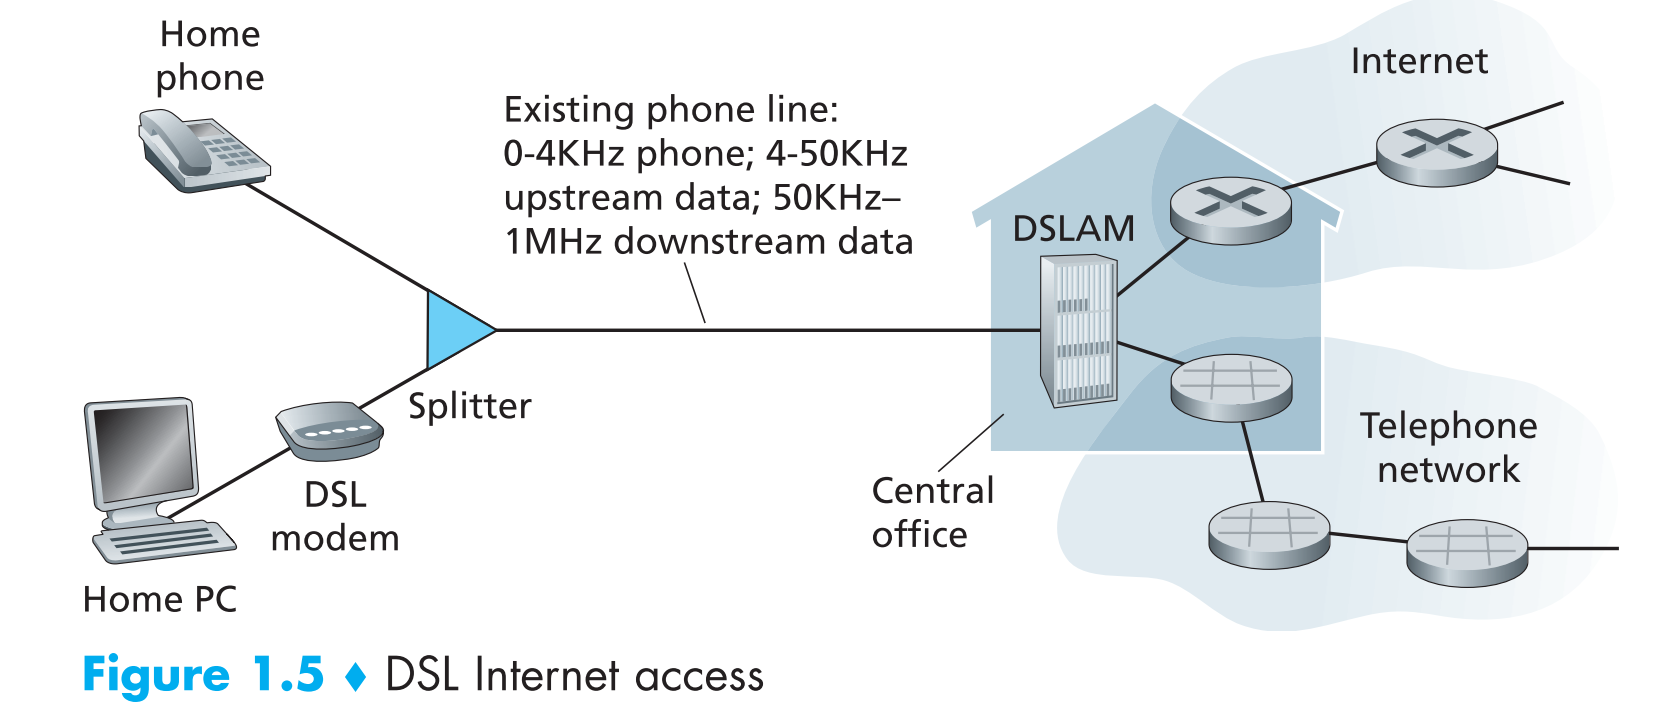 DSL Internet access